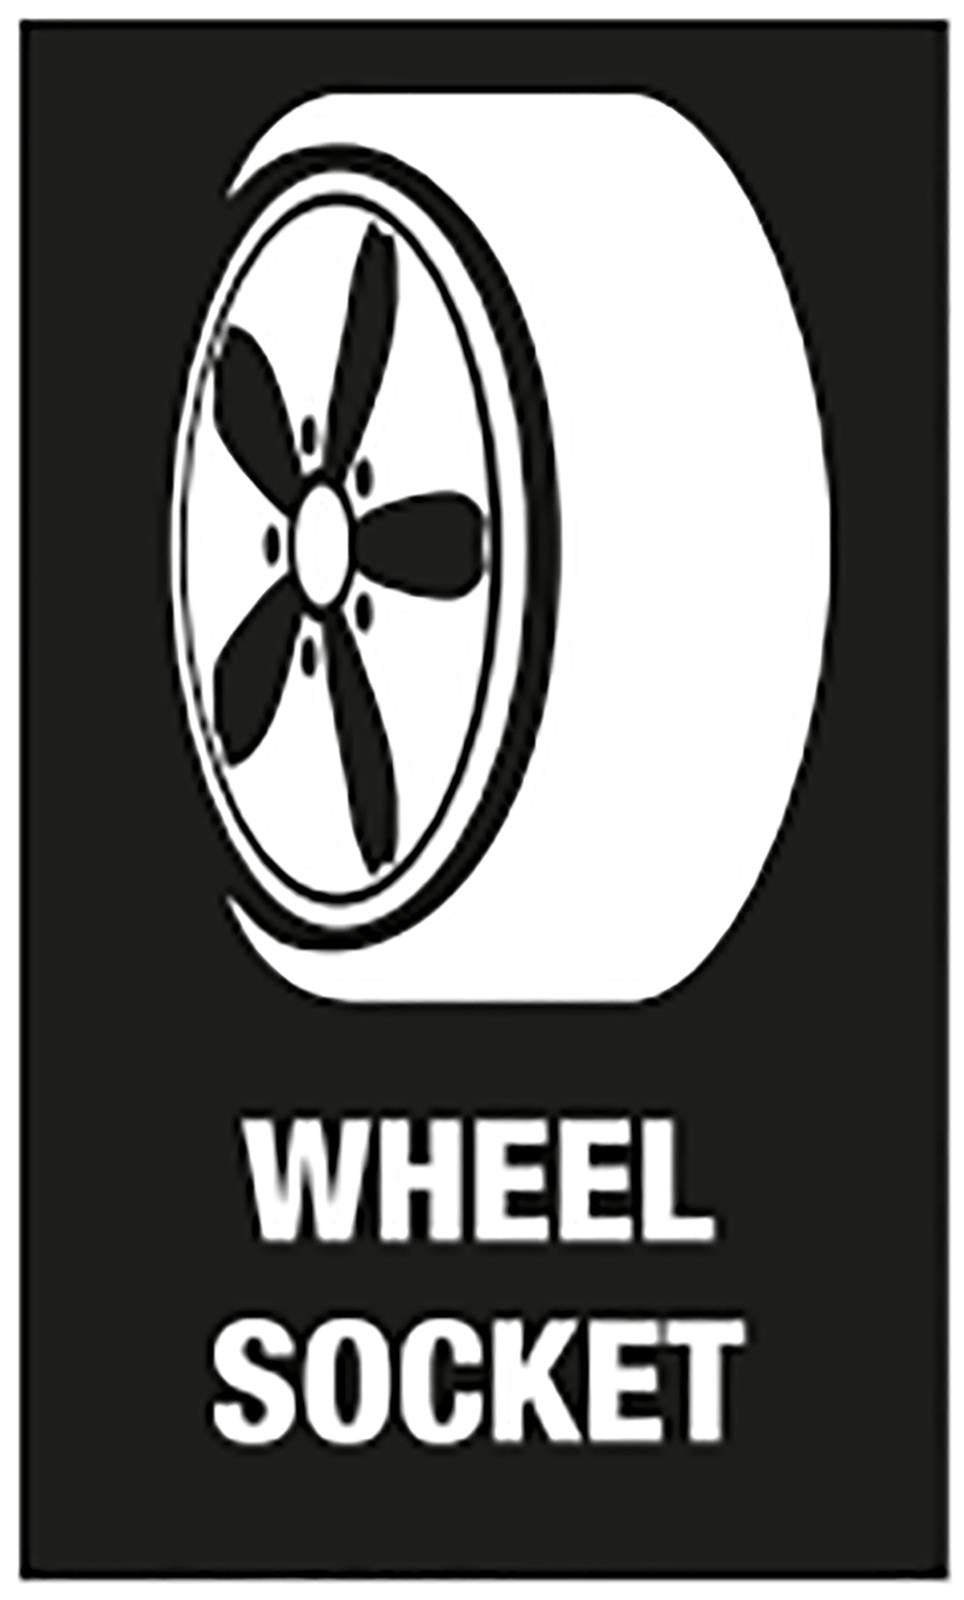 Wera Impact Socket Set 1/2" Drive for Alloy Wheels Wheel Impaktor C Set 1 3 Pieces 17-21mm